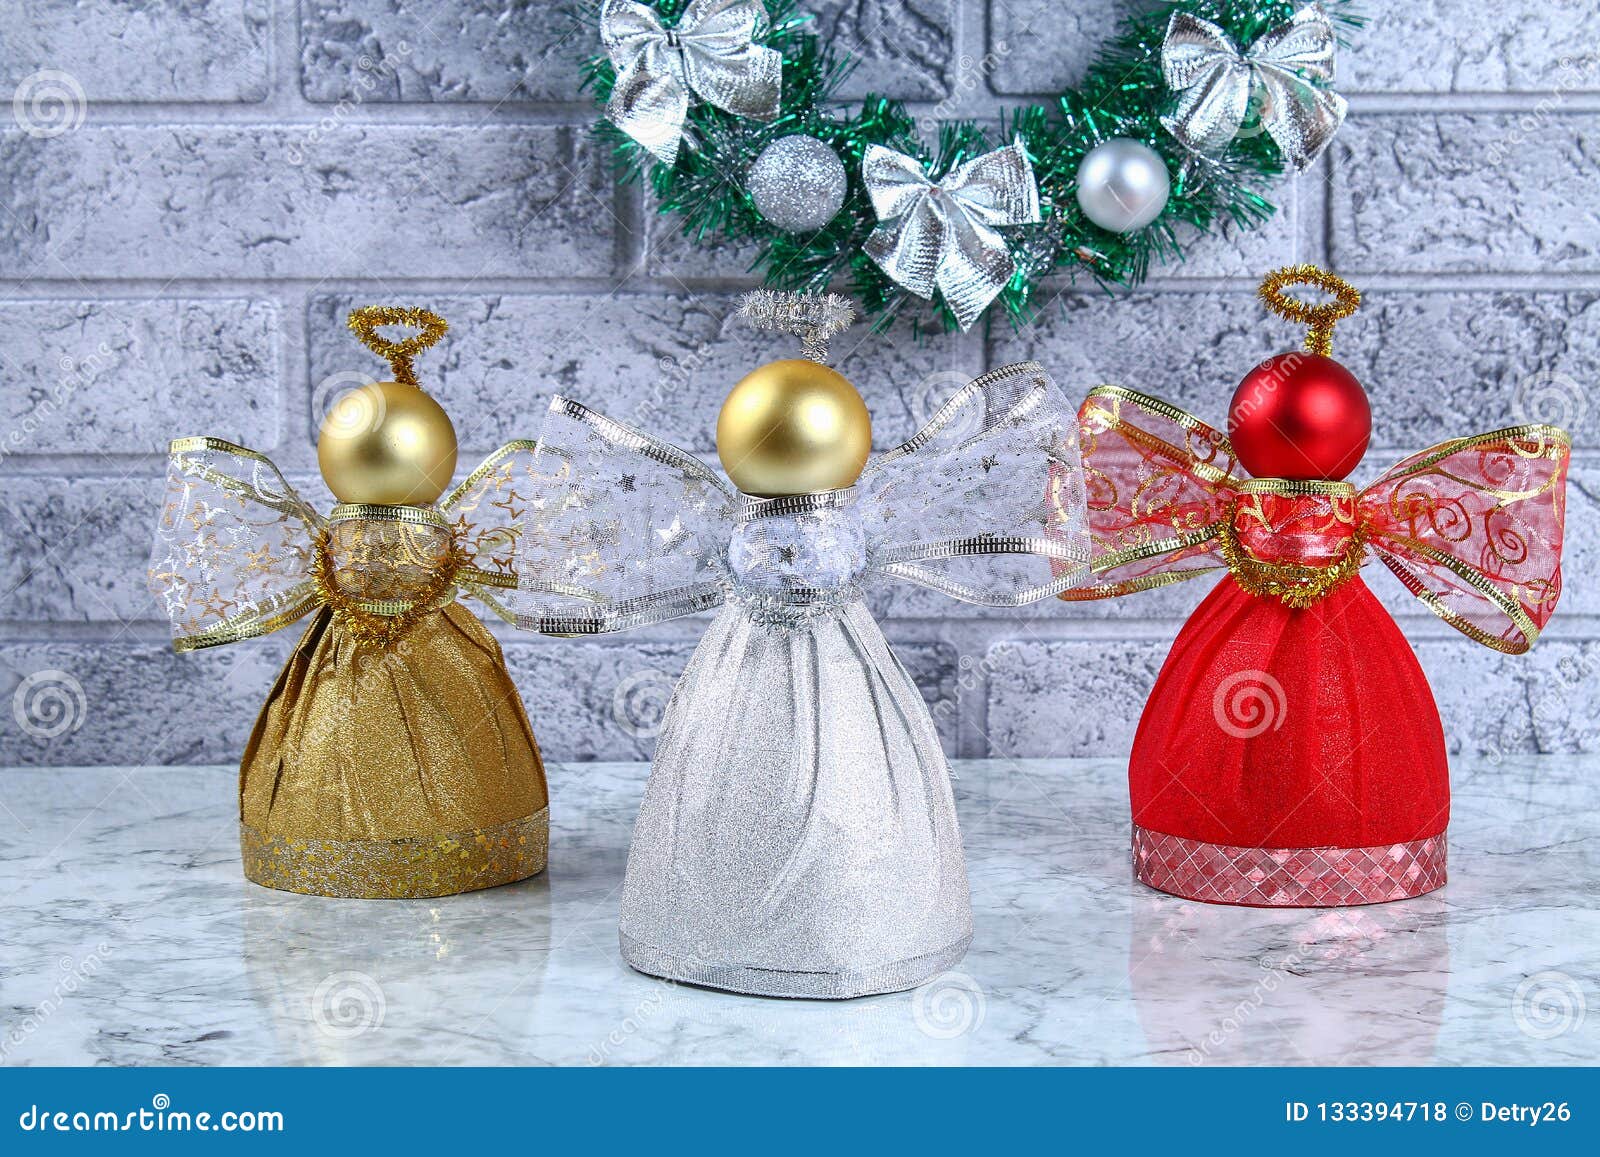 Christmas Decorations With Plastic Bottles | Psoriasisguru.com